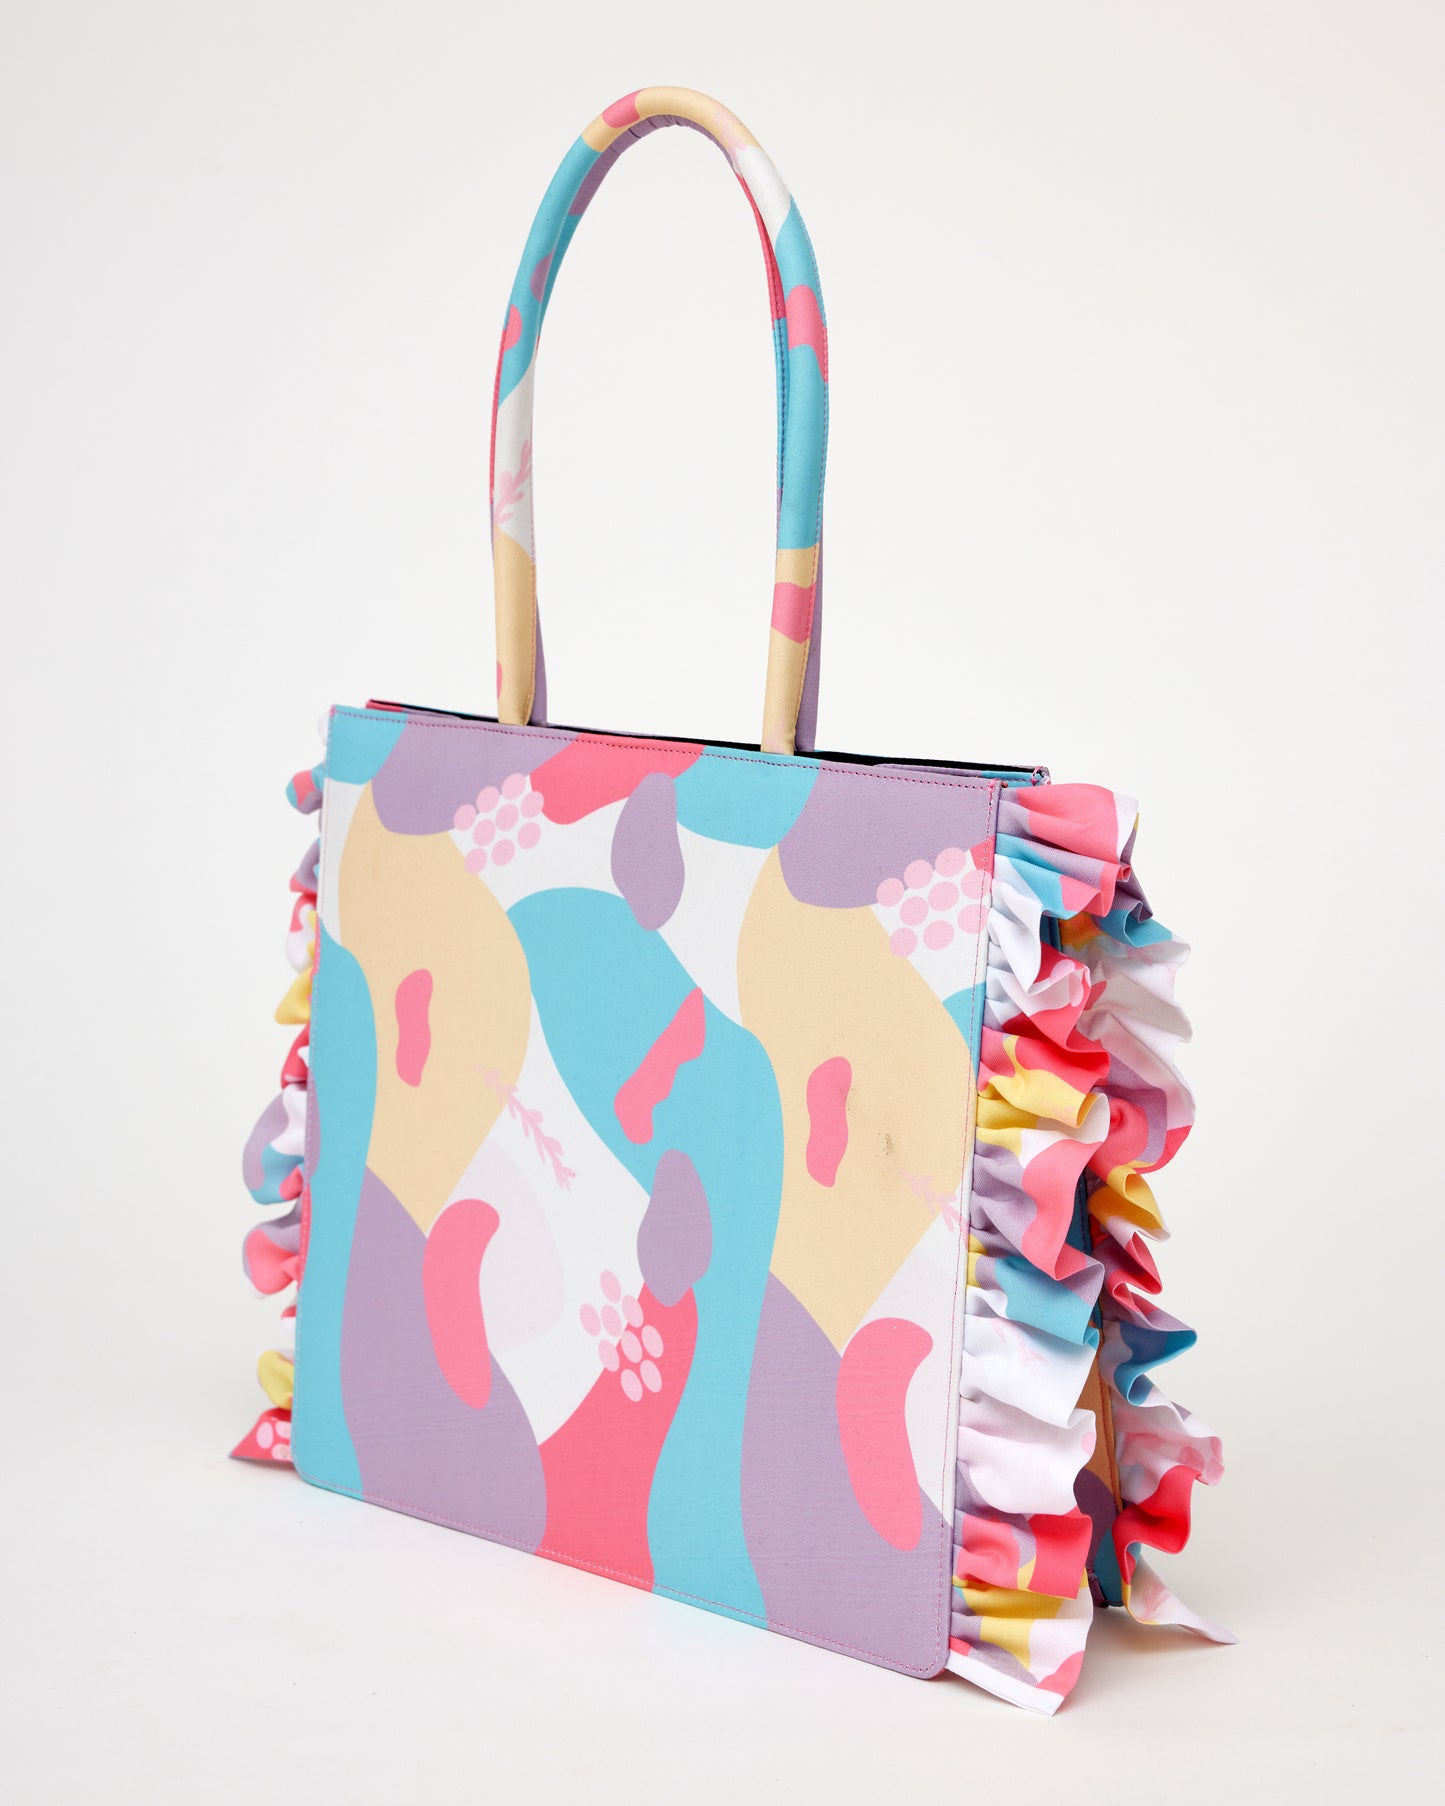 Pastel Abstract Tote Bag